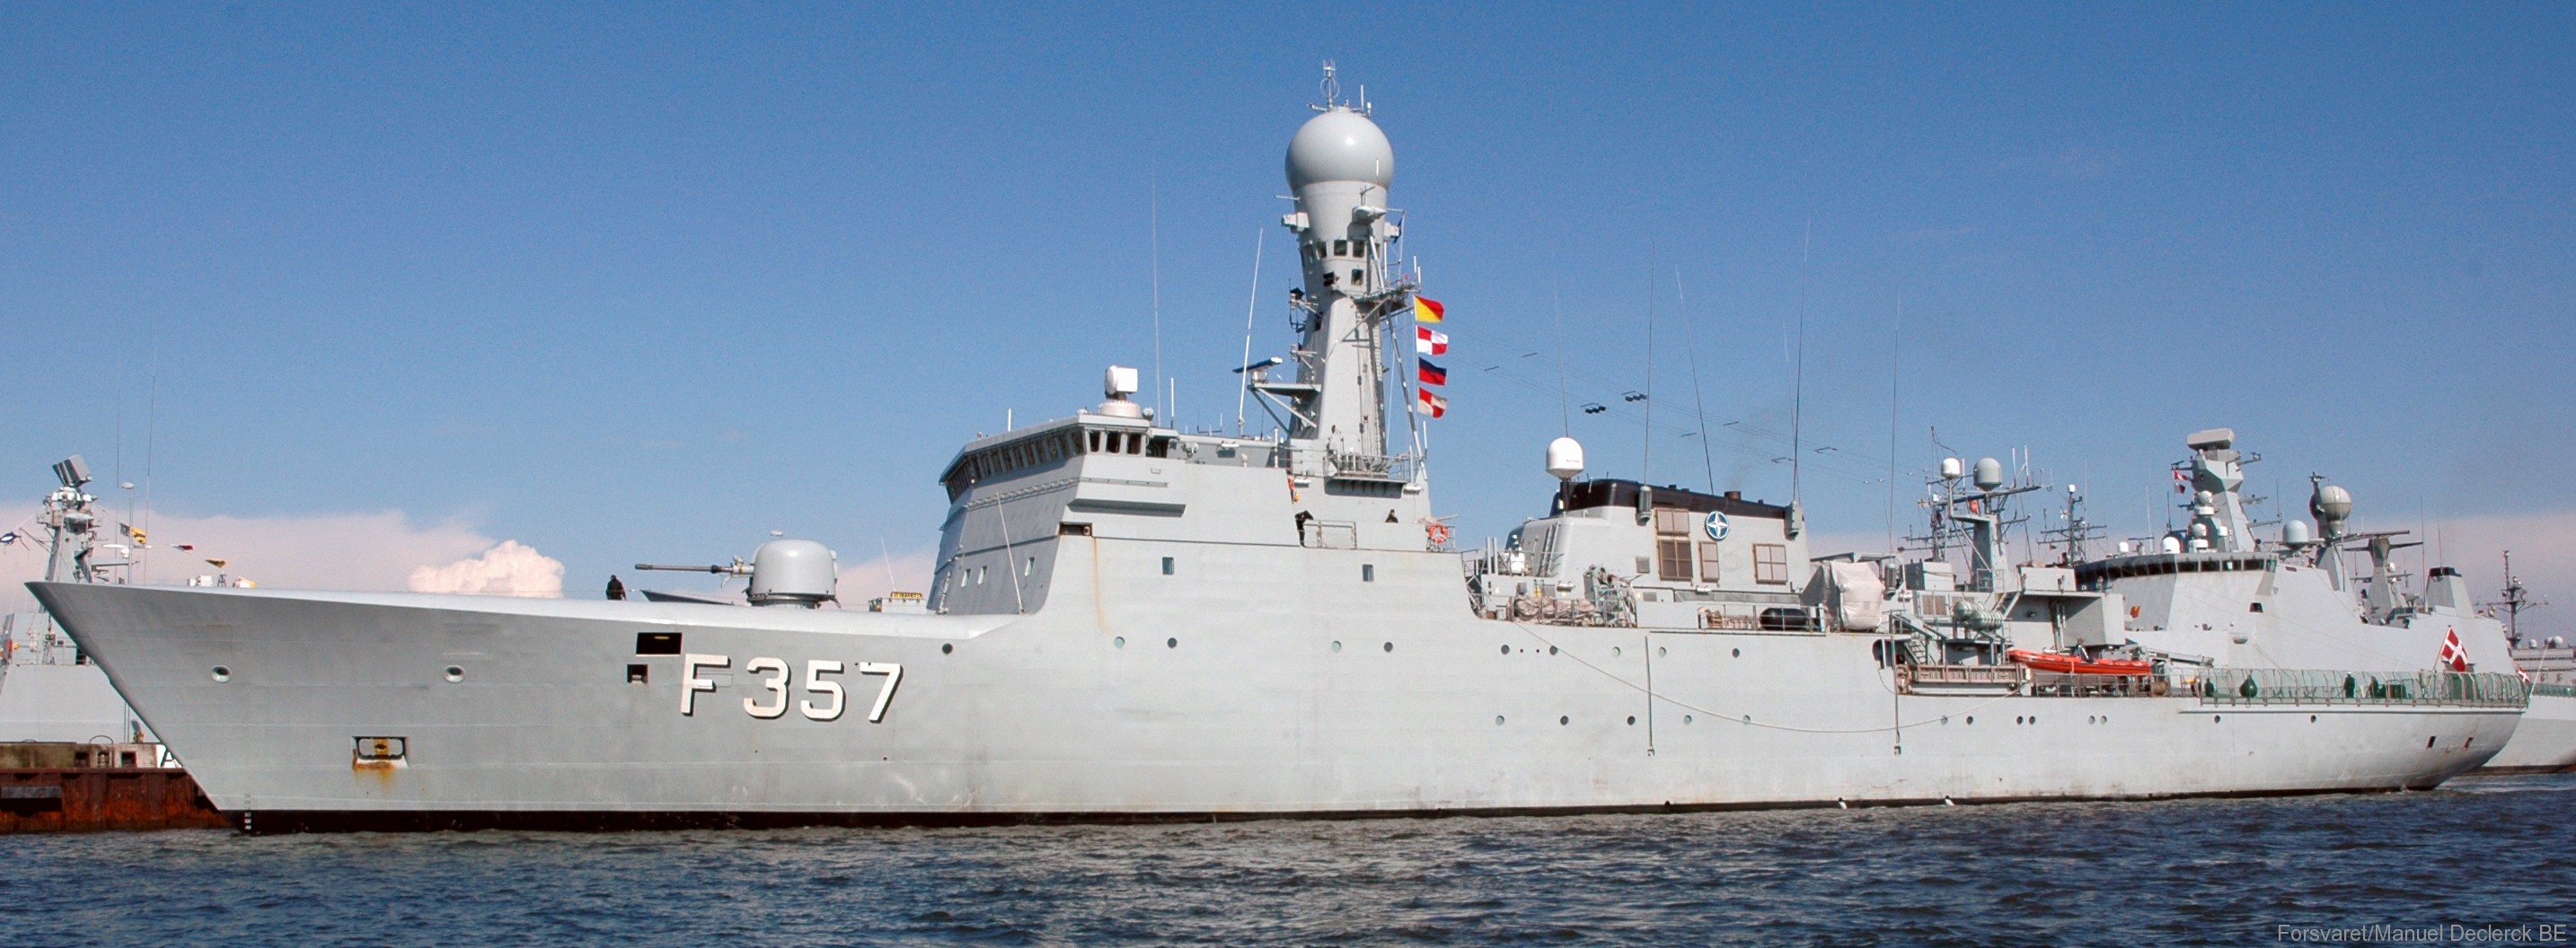 f-357 hdms thetis ocean patrol frigate royal danish navy kongelige danske marine inspektionsskibet 29